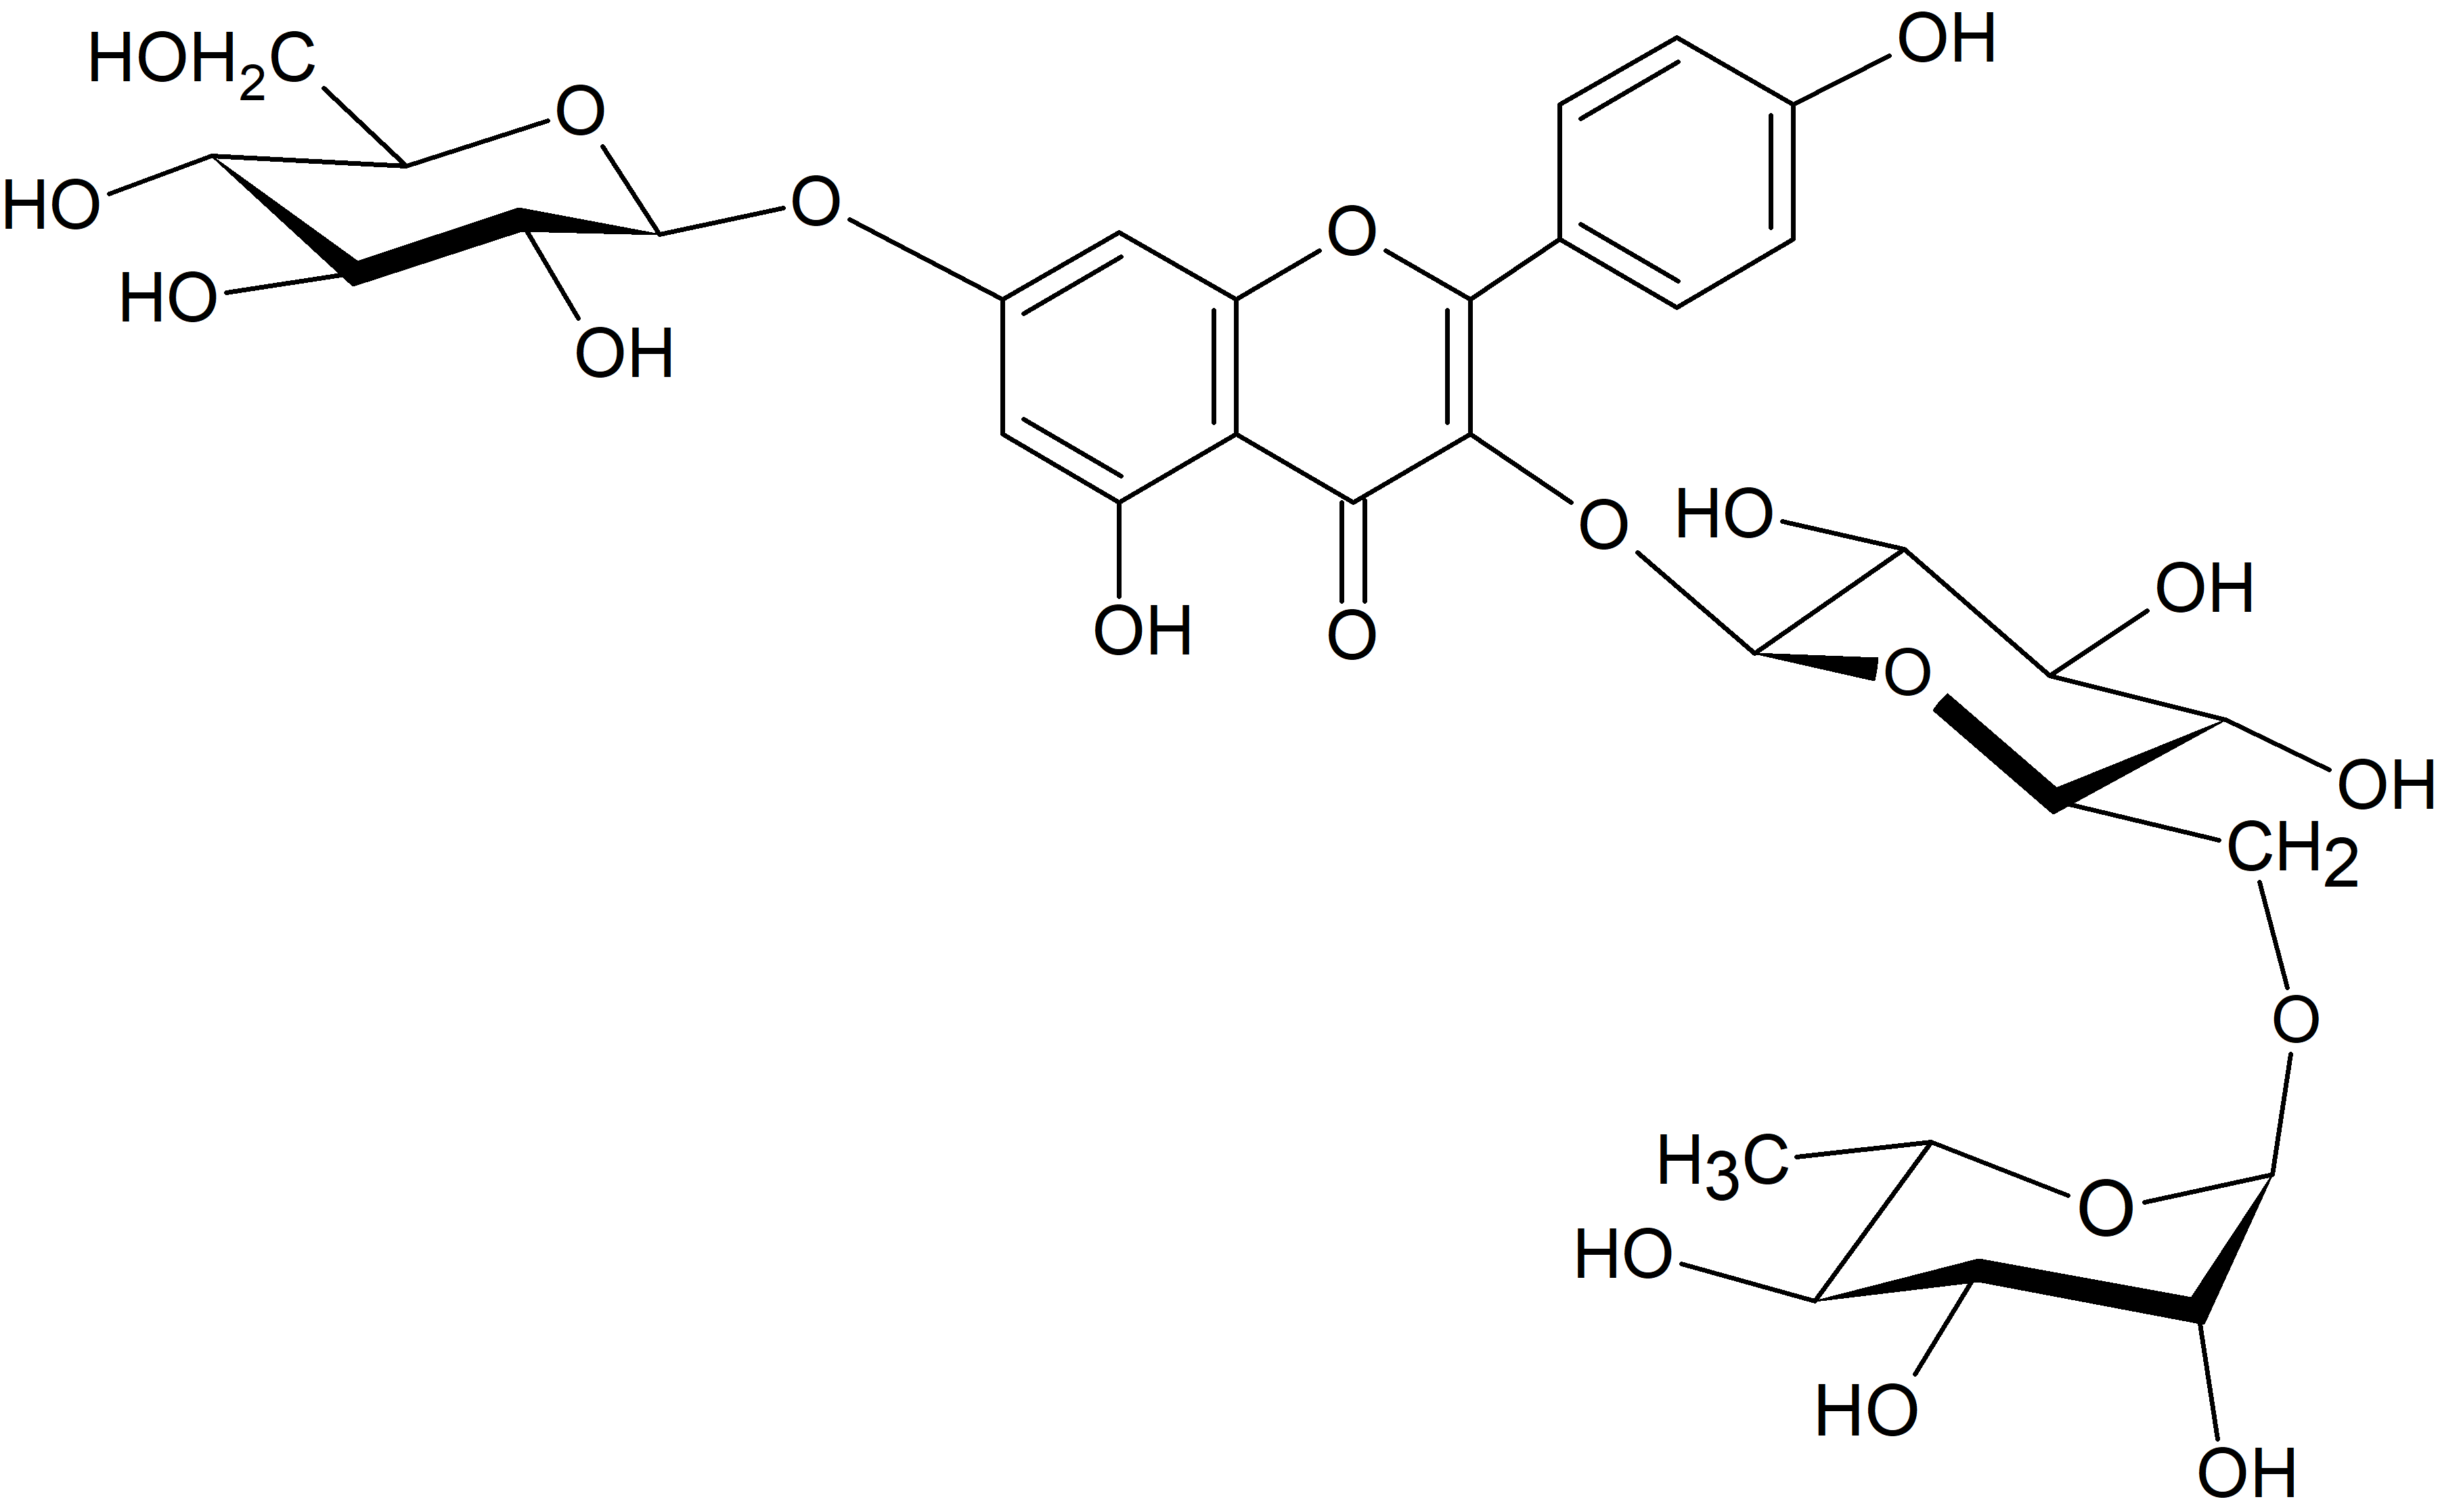 Kaempferol 3-O-rutinoside-7-O-glucoside